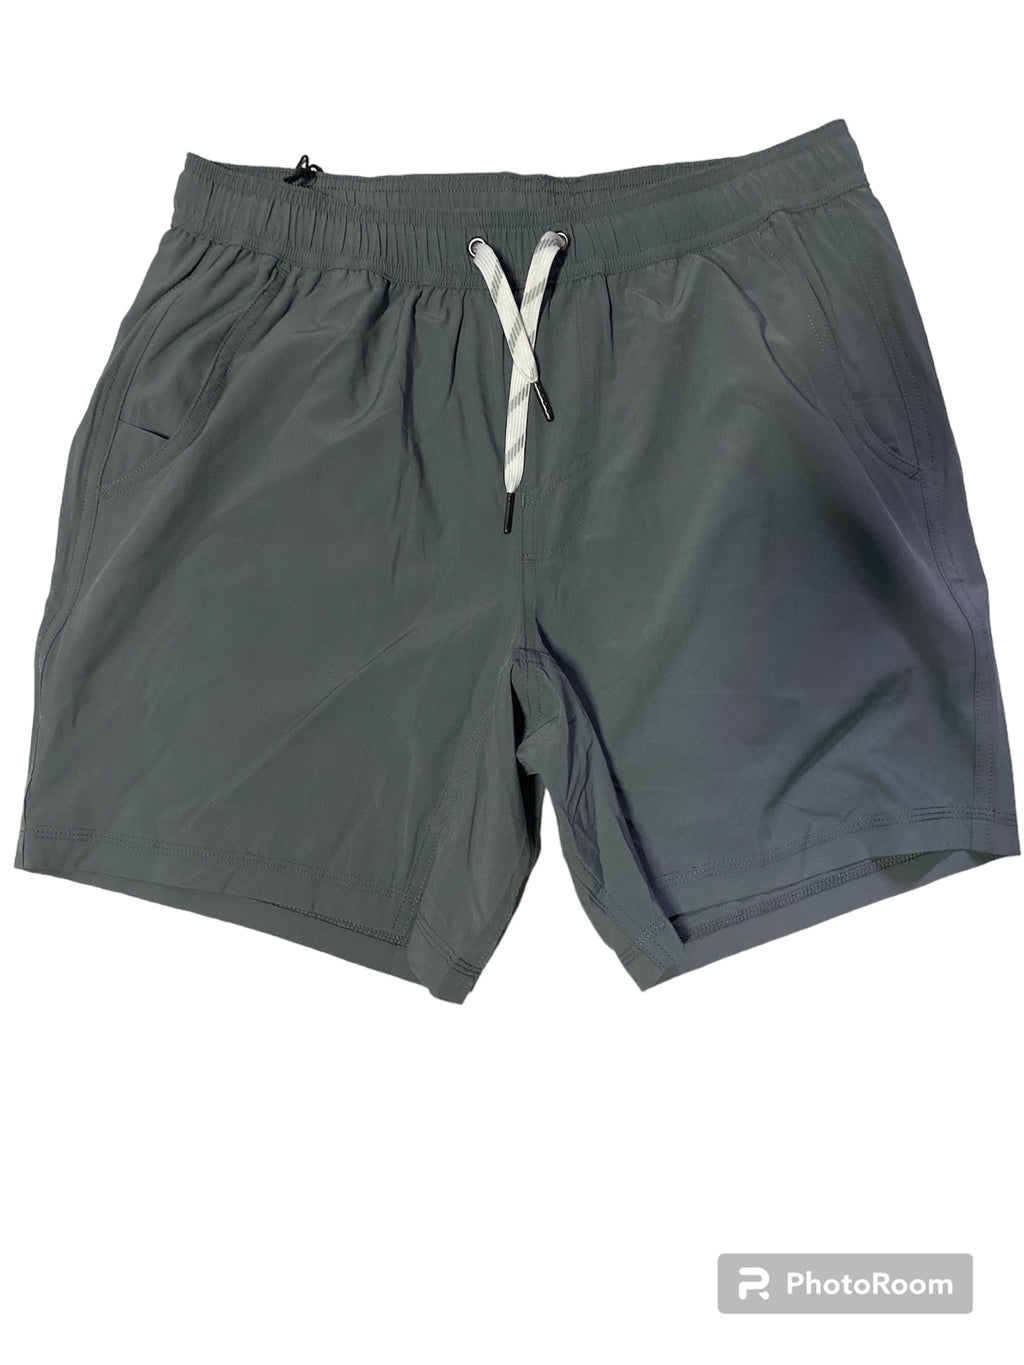 Meripex Grey 7" Swim Shorts